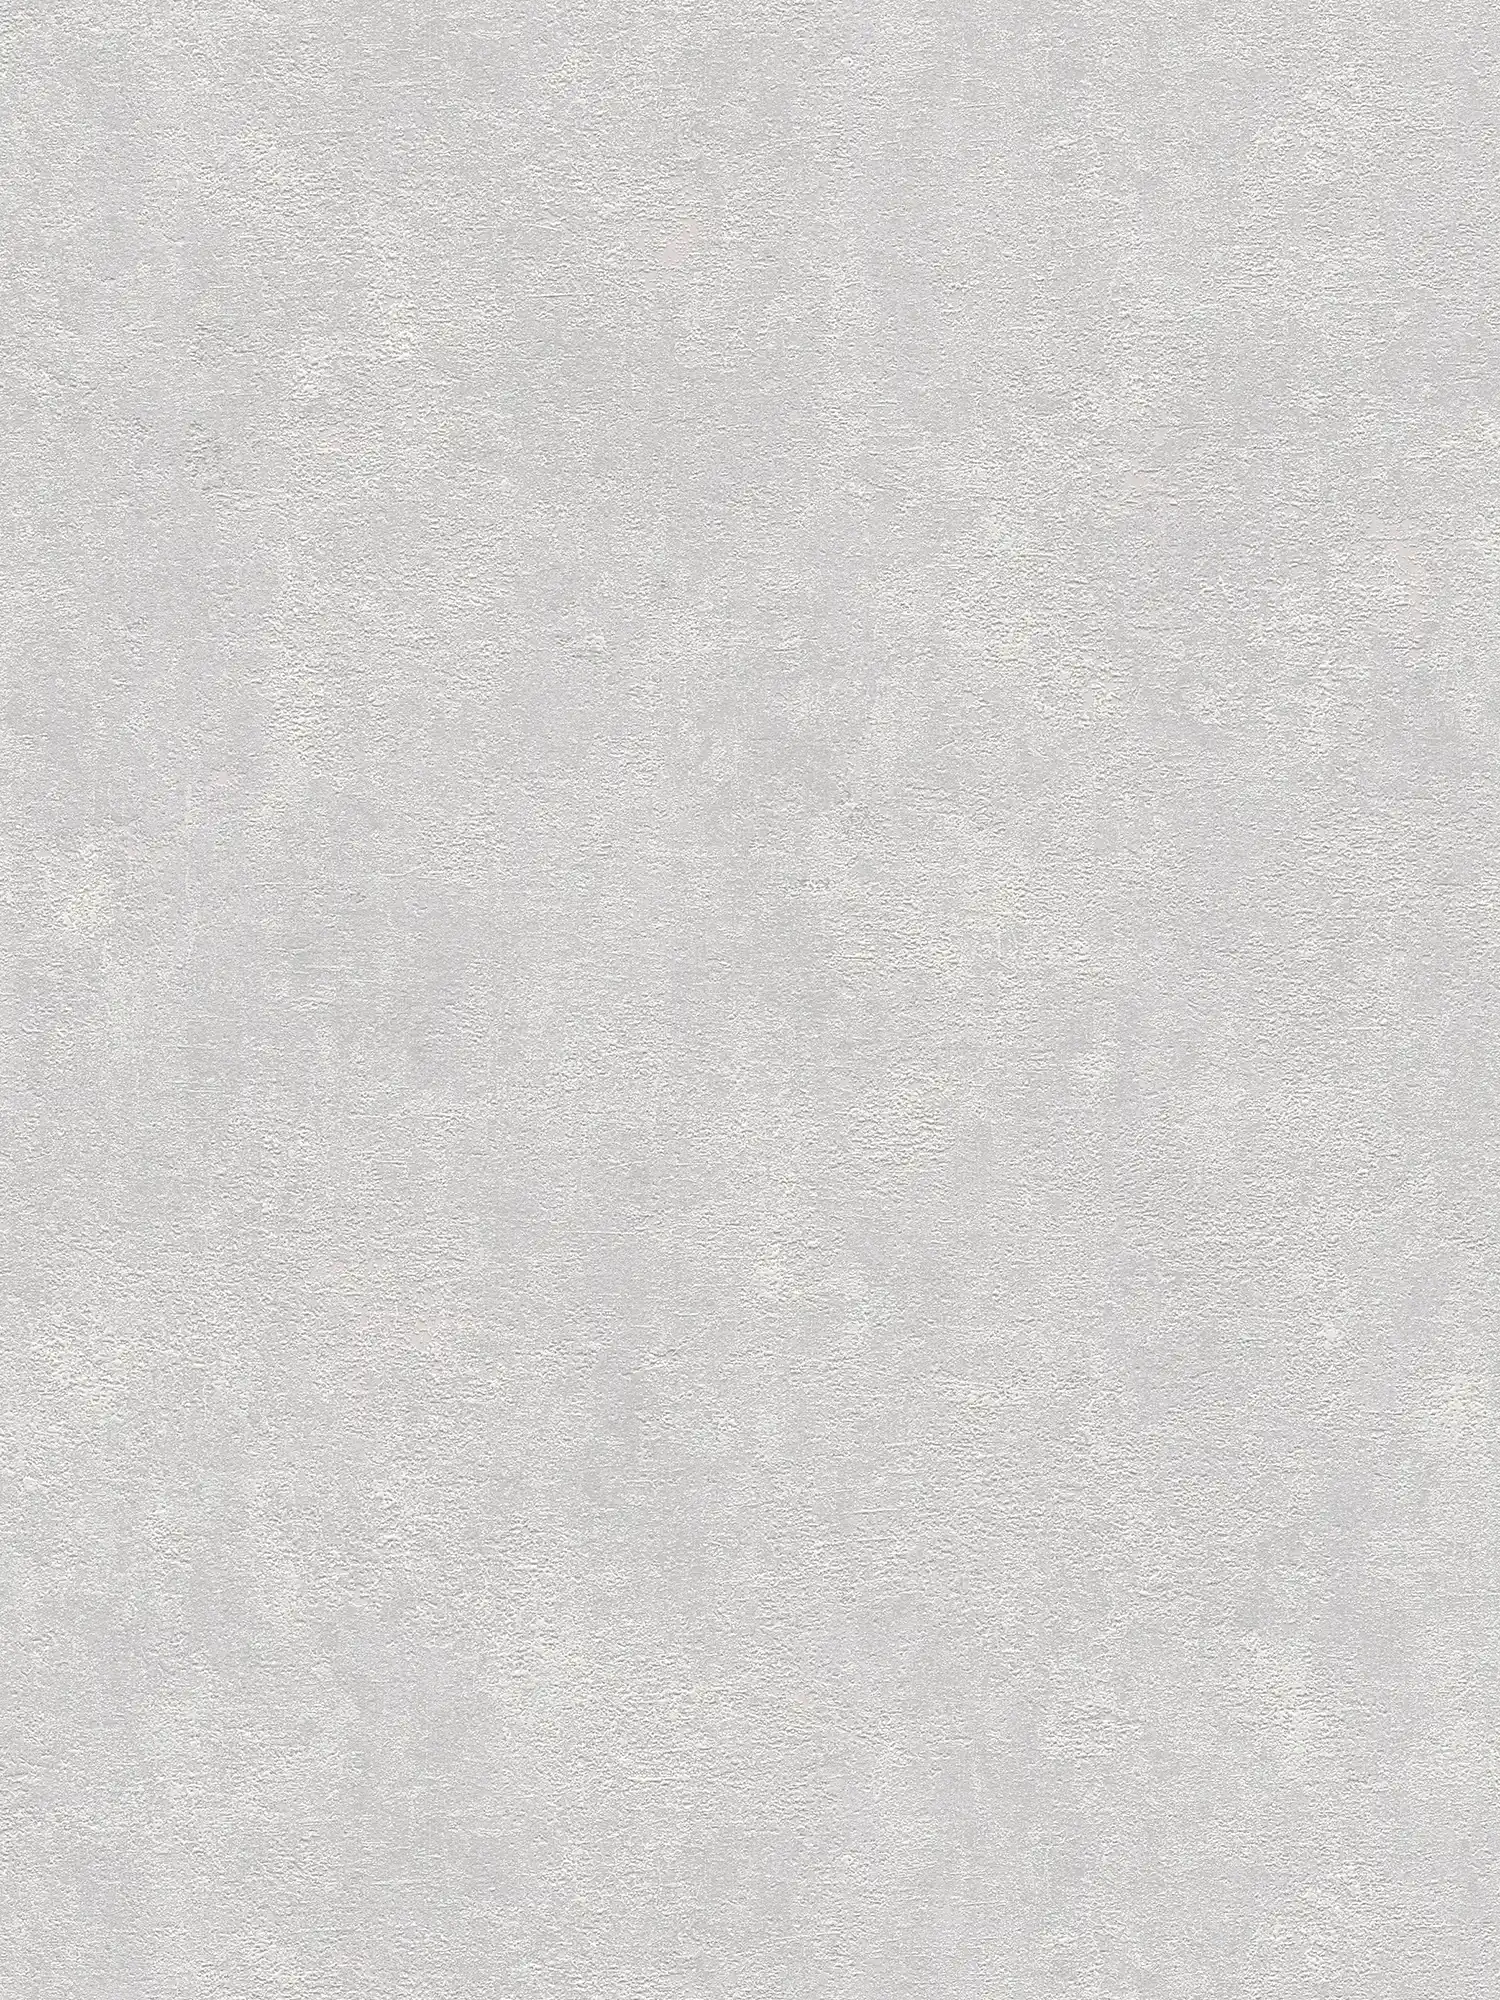 Wallpaper plaster structure, plain & satin - light grey
